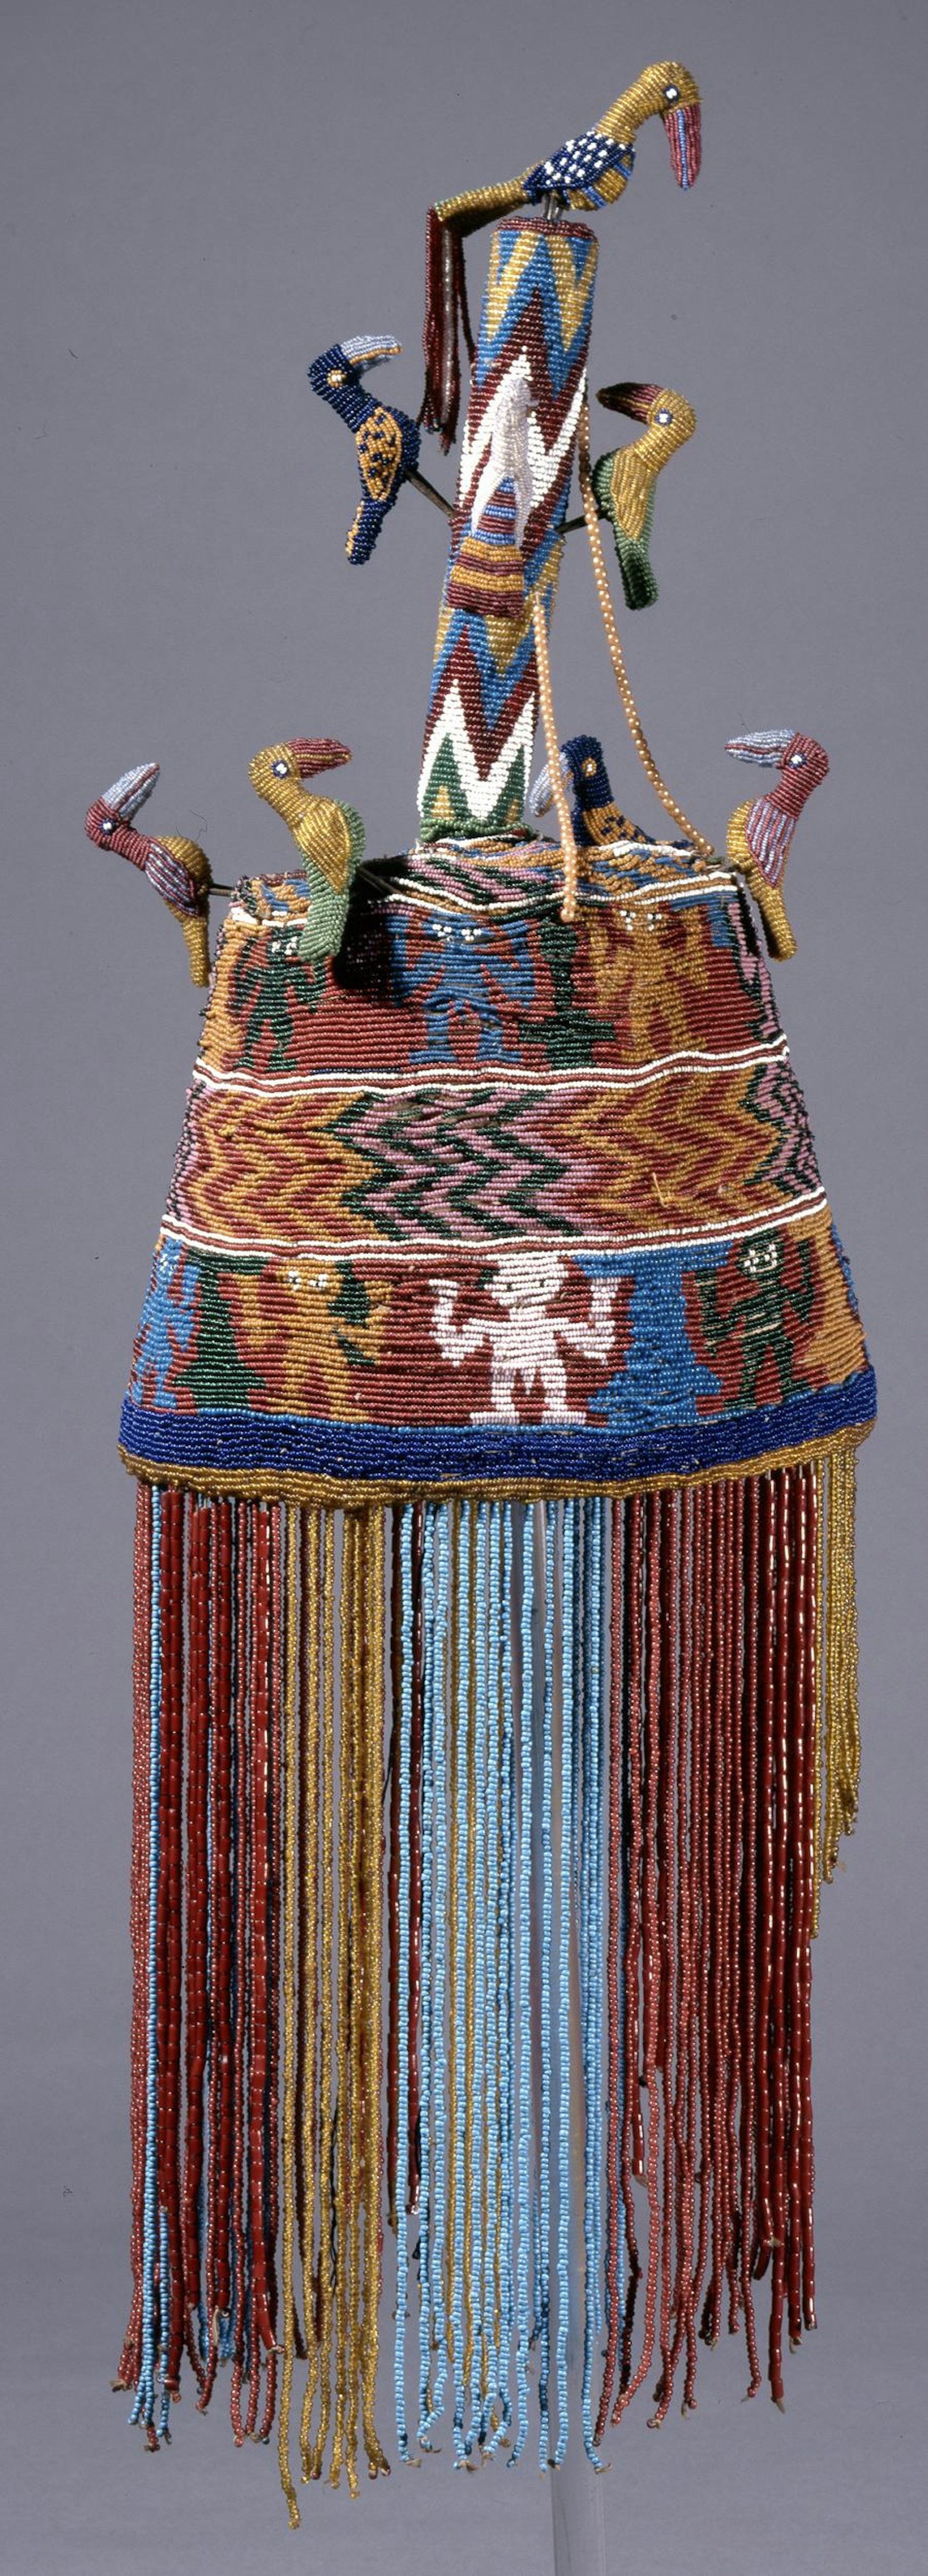 Beaded Crown (ade ileke) by Yoruba artist (19th century).